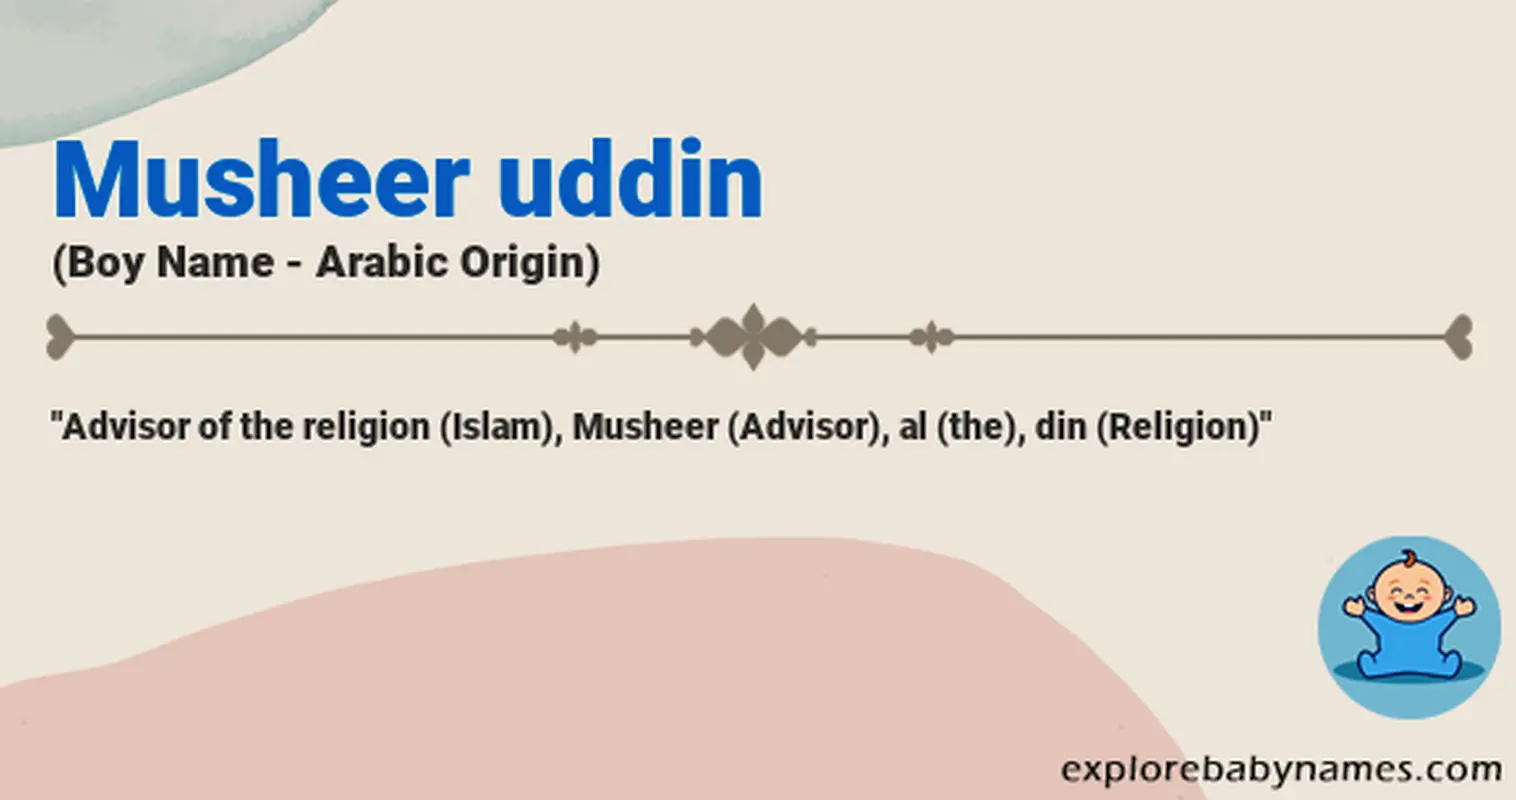 Meaning of Musheer uddin